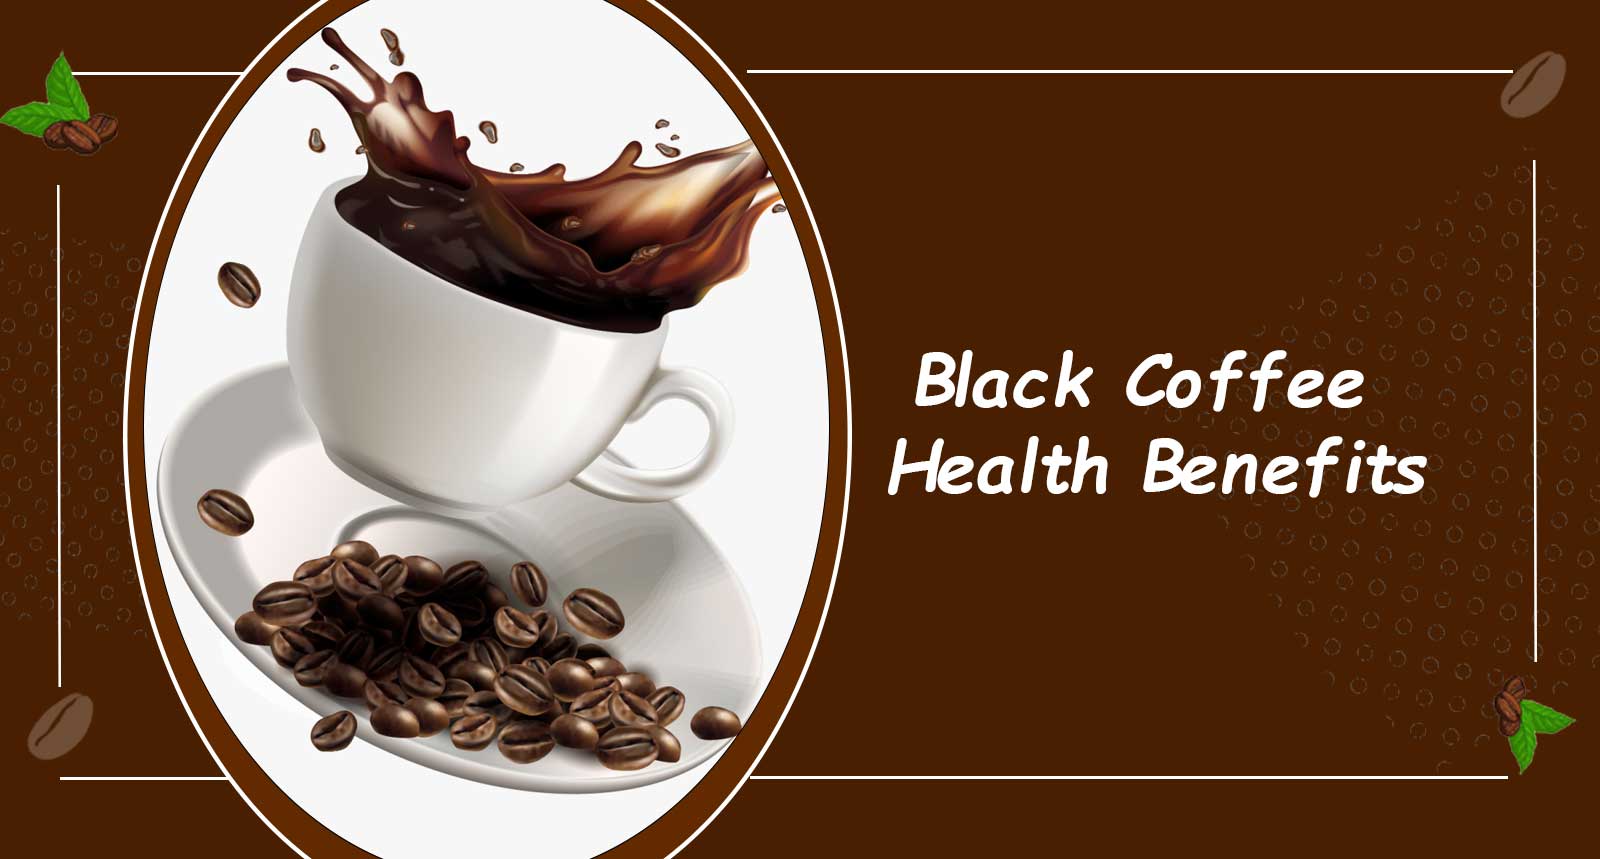 Black coffee health benefits